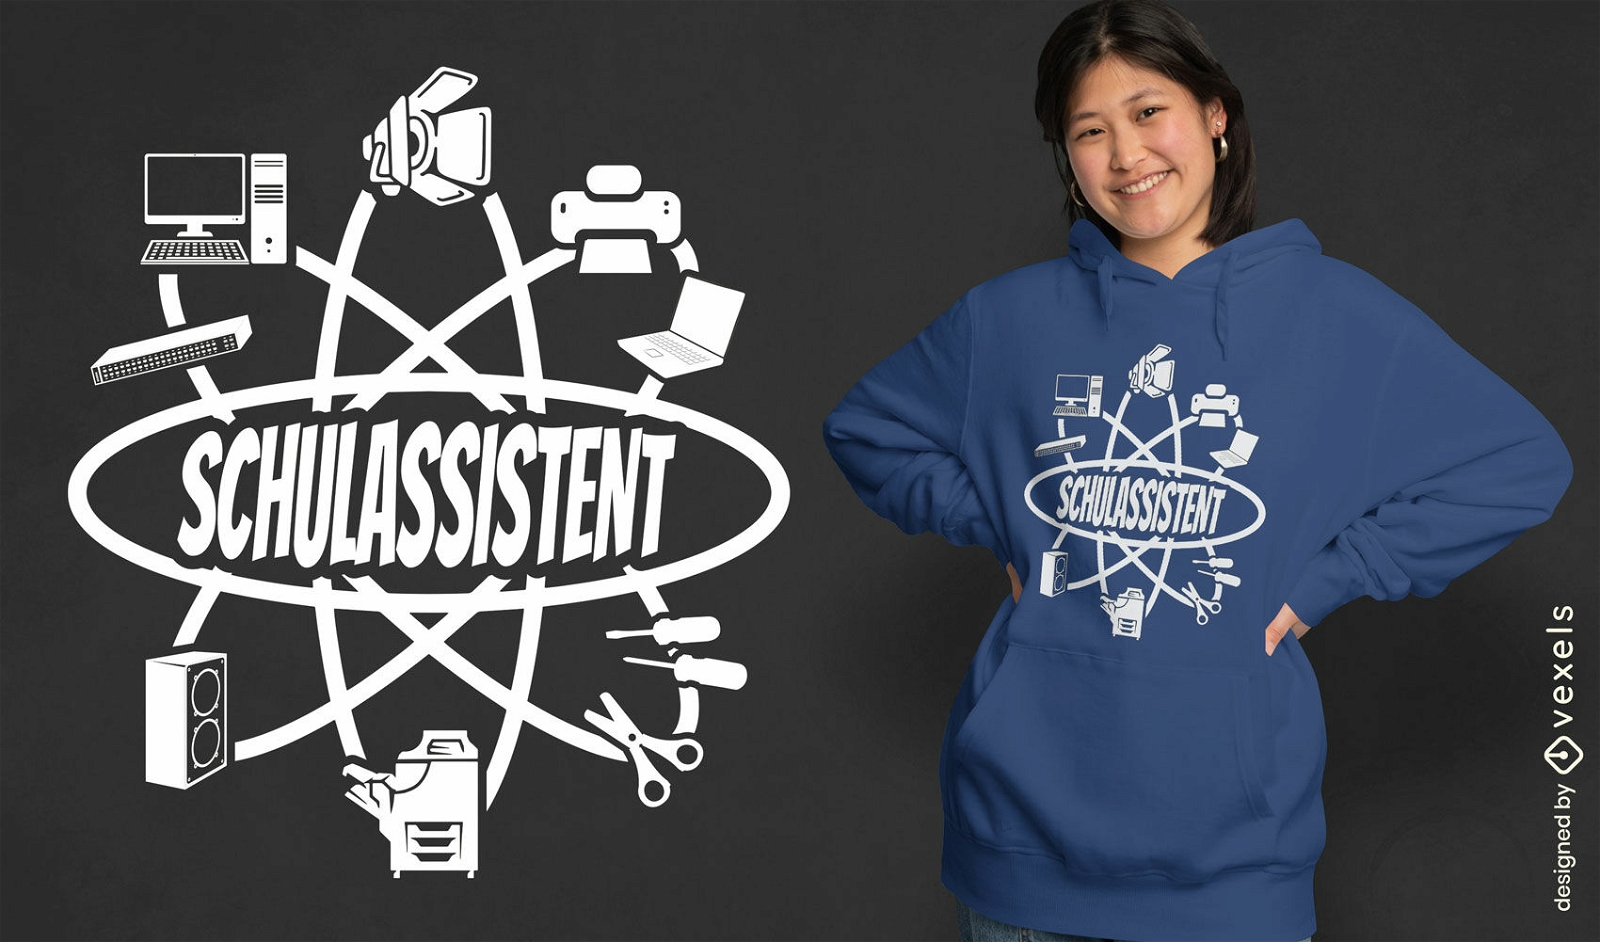 Educational assistant t-shirt design